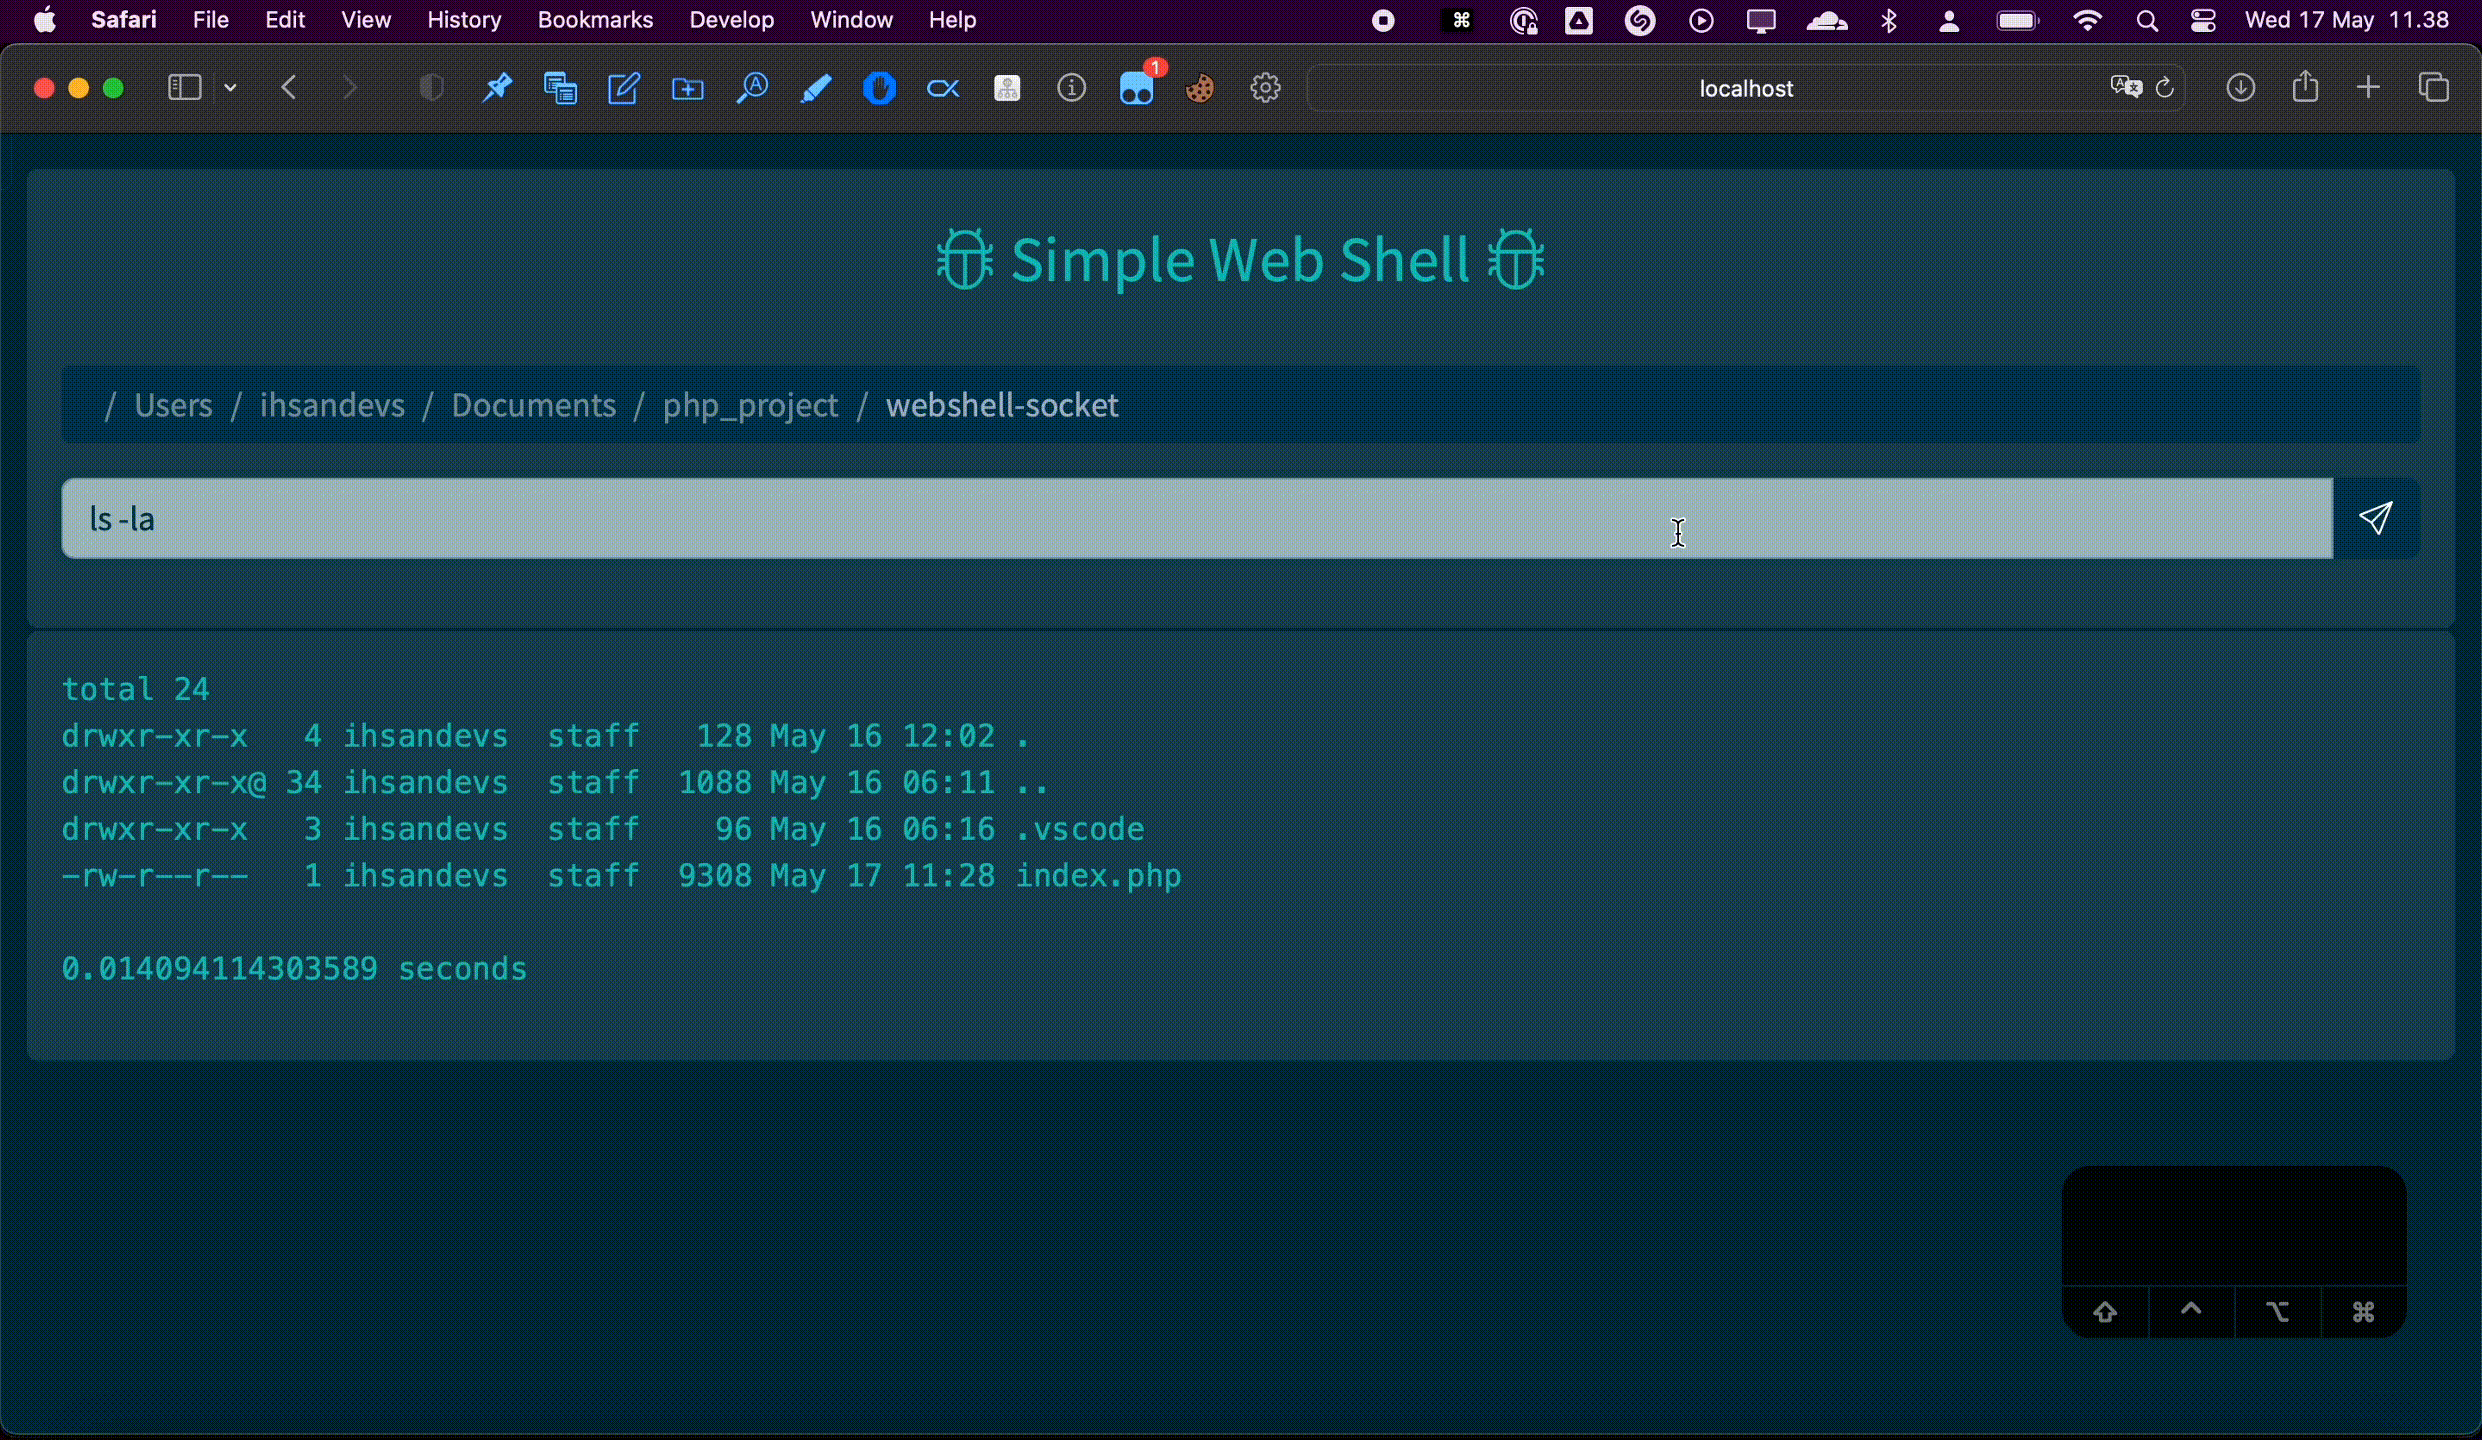 Simple Web Shell